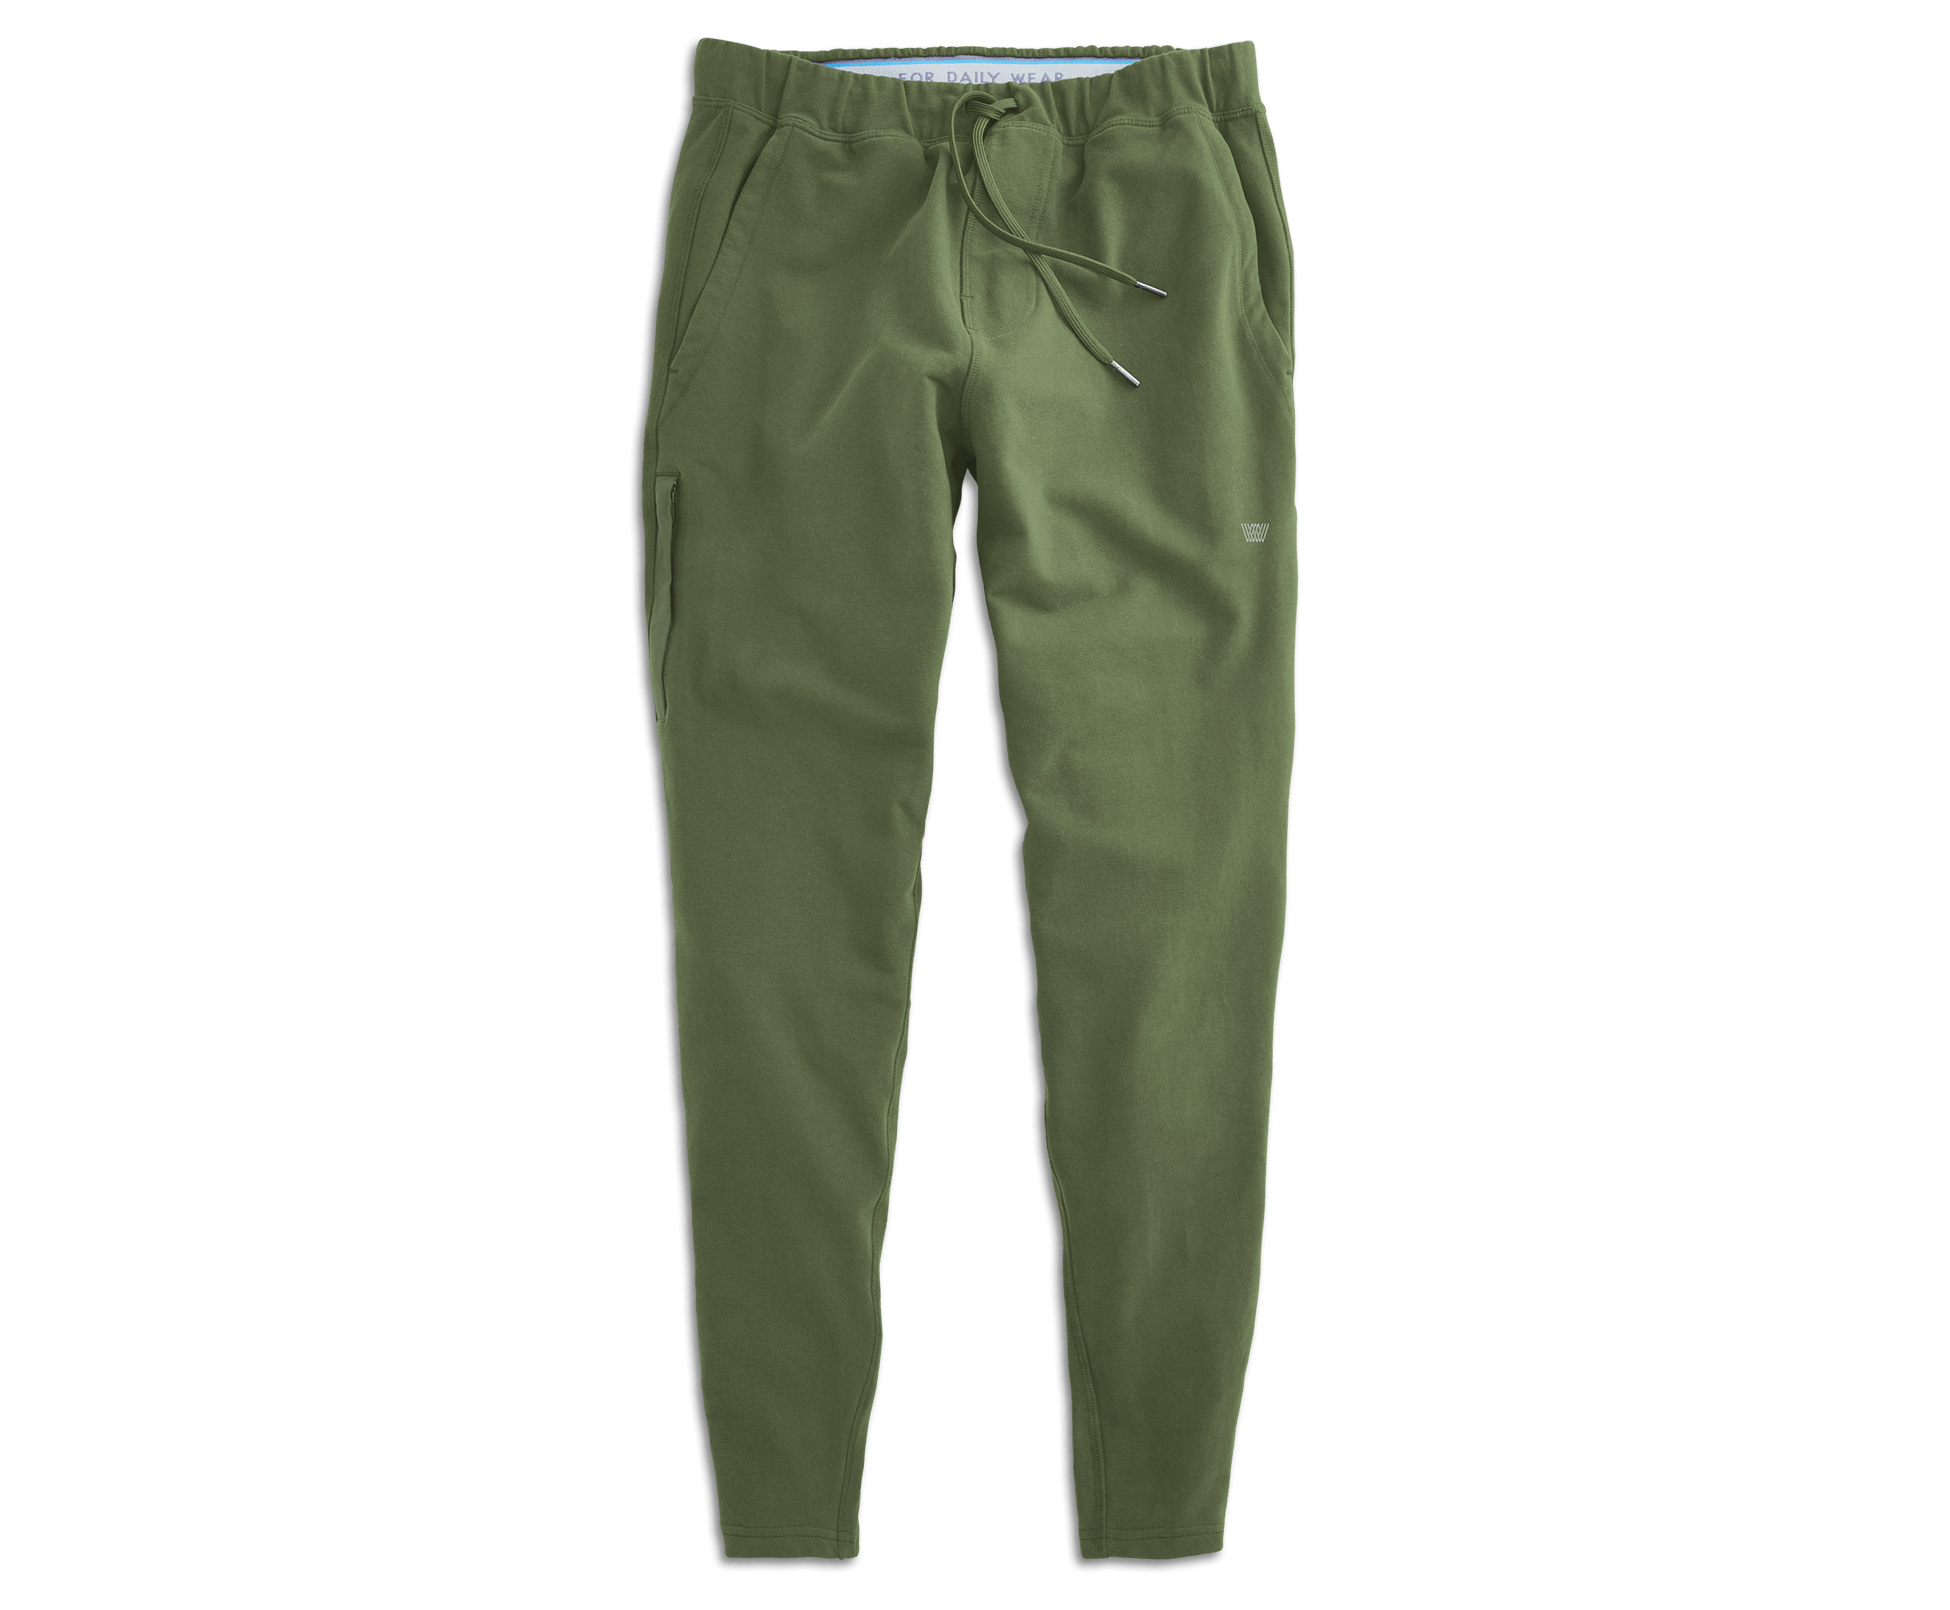 Mack Weldon Ace Sweatpants Grey Heather Gray - Size Large Pants Joggers